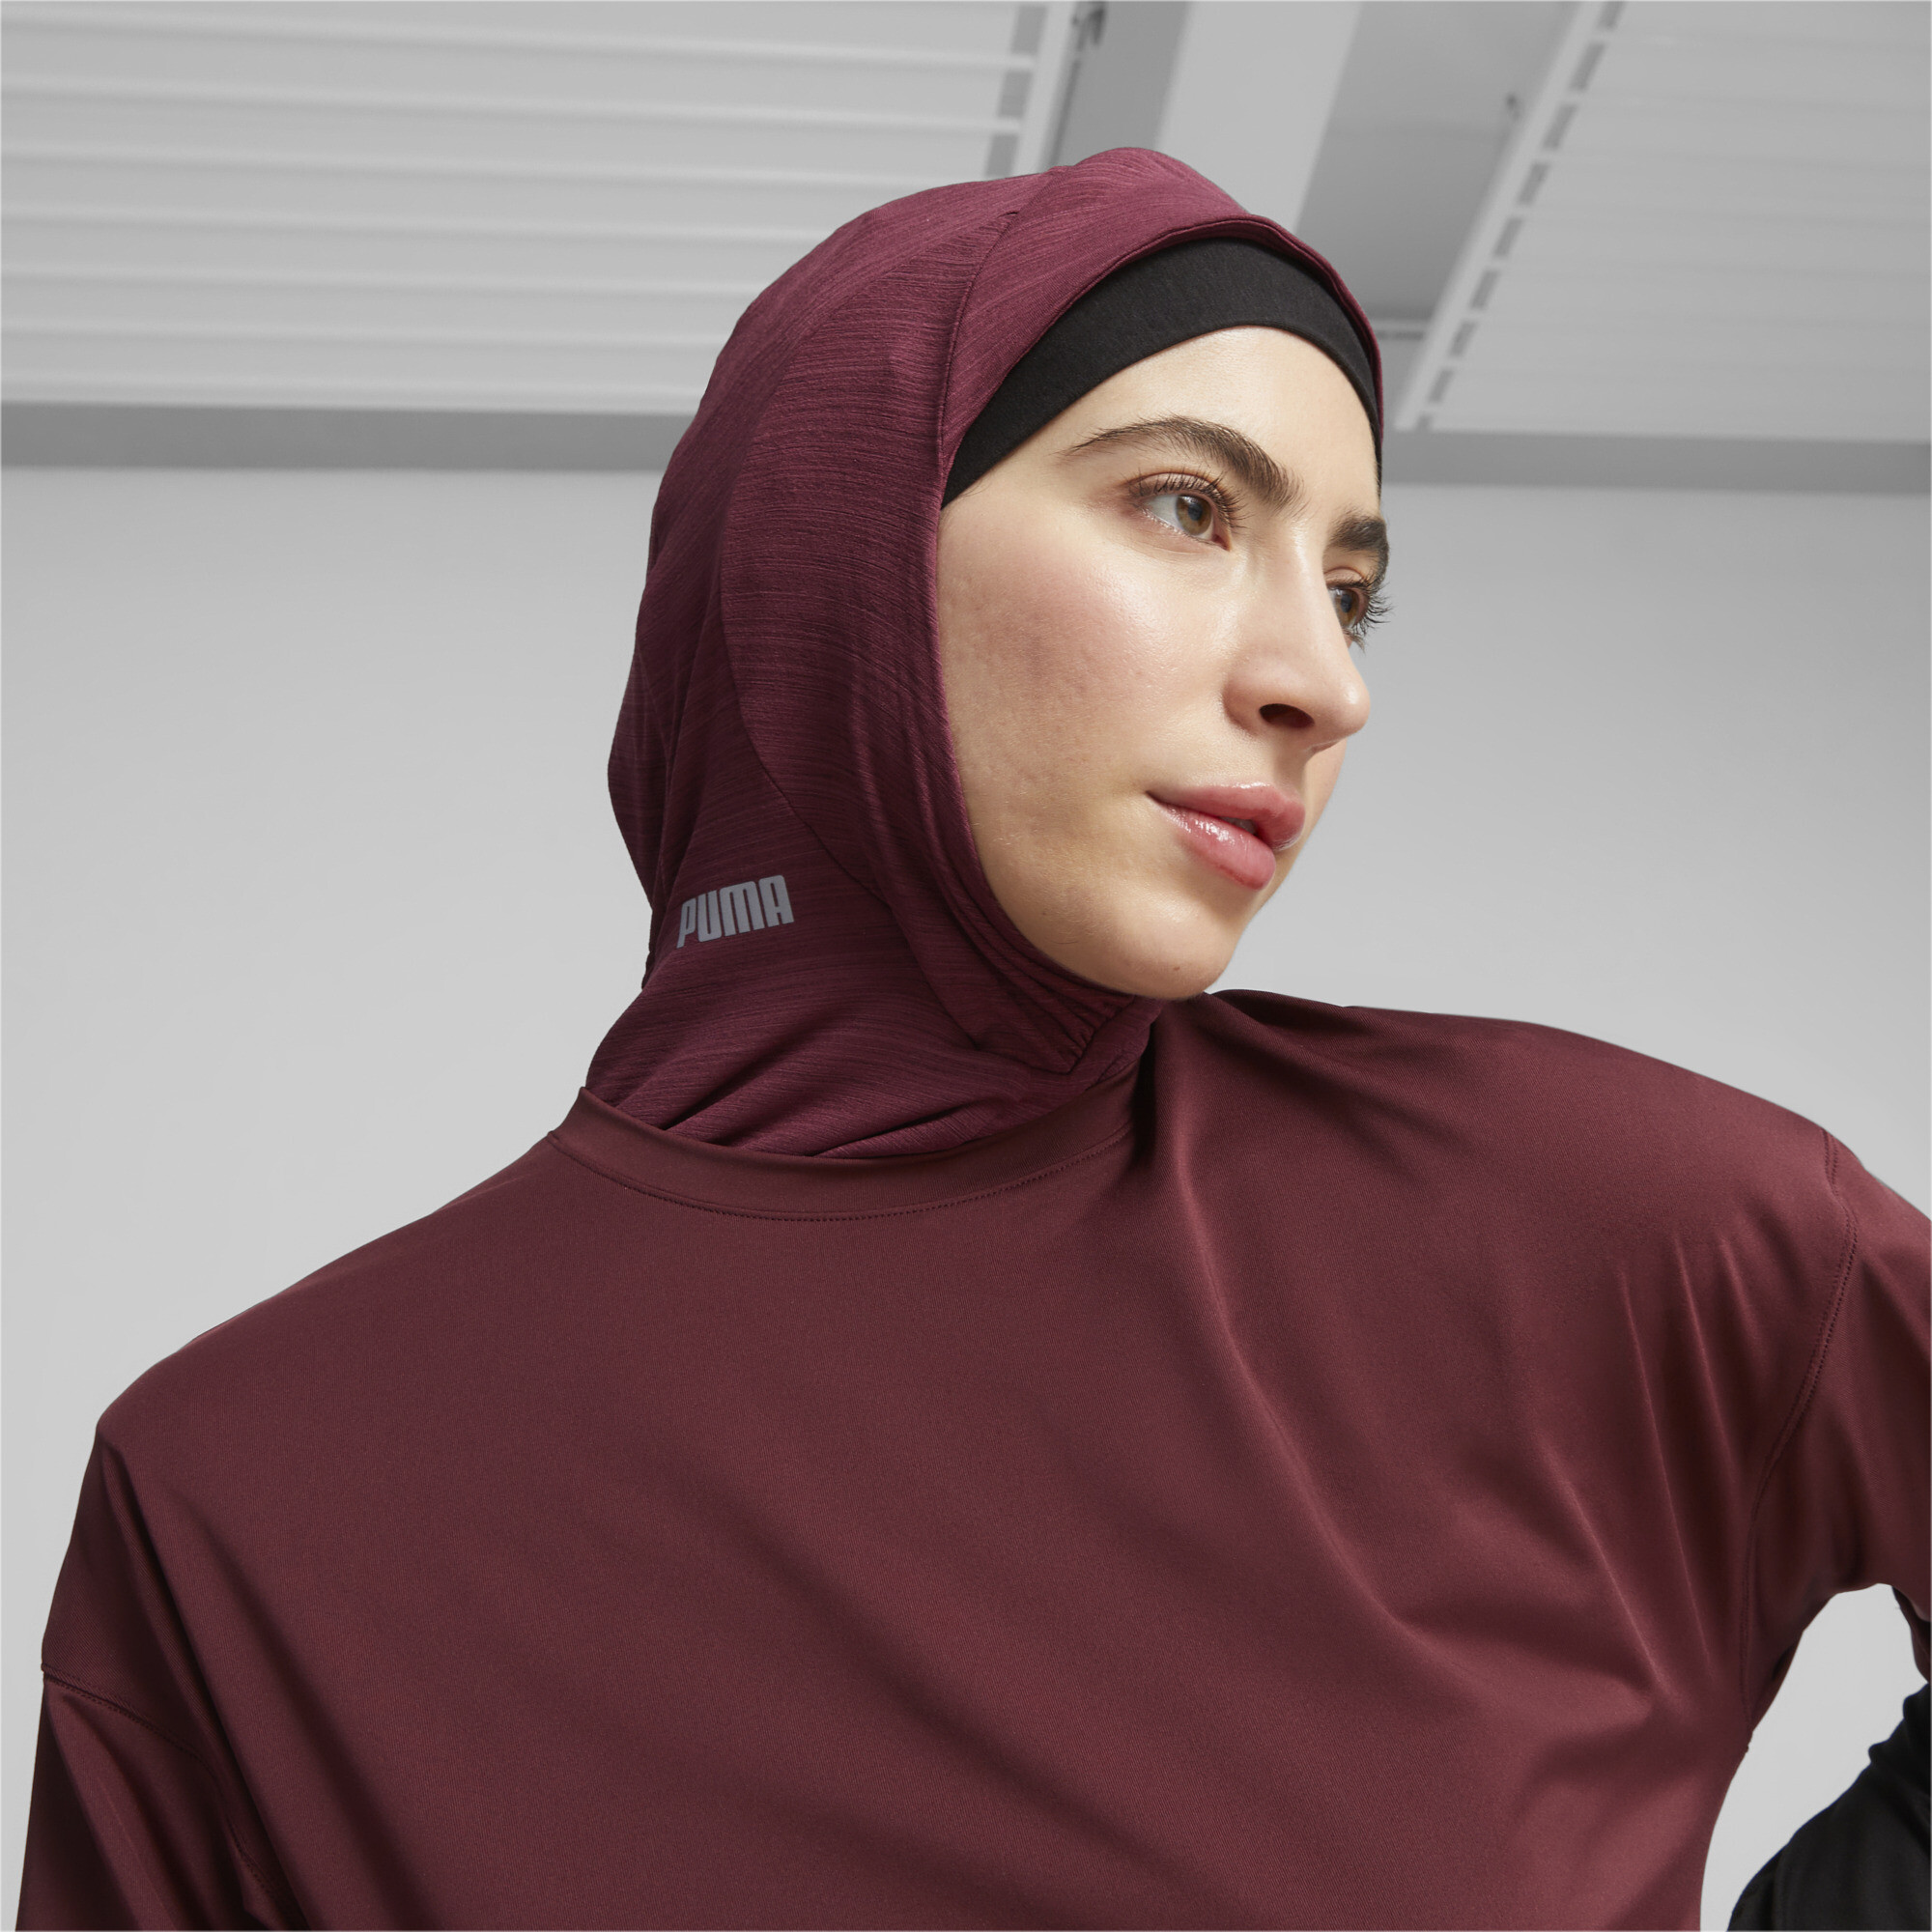 Women's Puma Sports Running Hijab, Red, Size S, Accessories